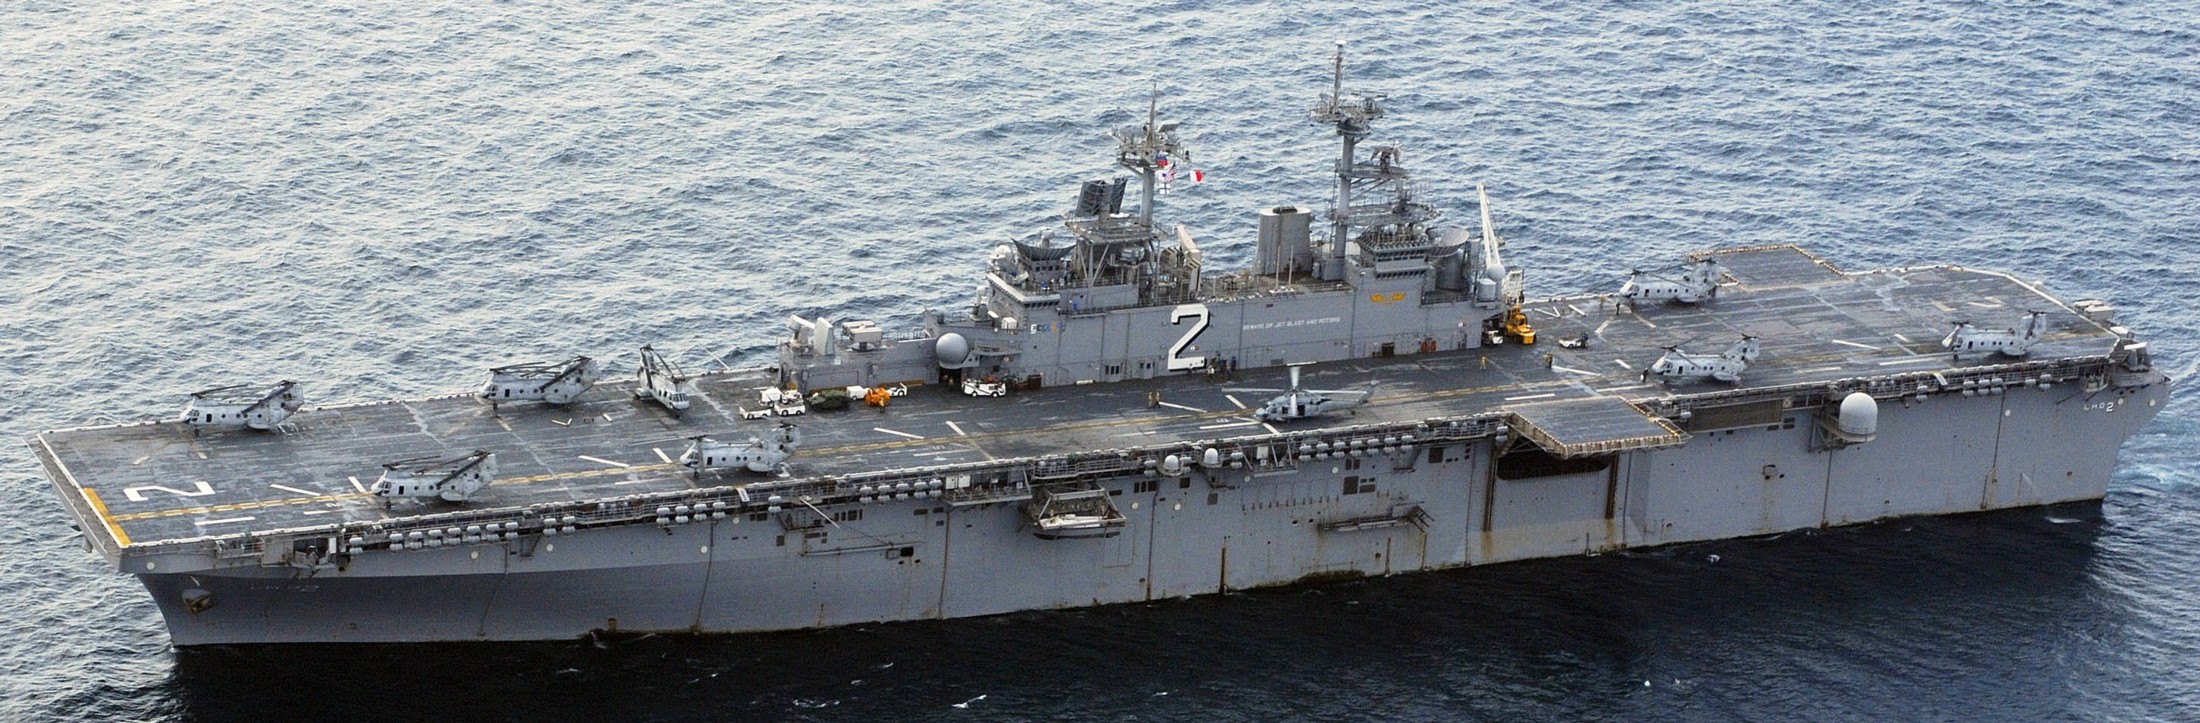 lhd-2 uss essex wasp class amphibious assault ship landing helicopter us navy andaman sea 62